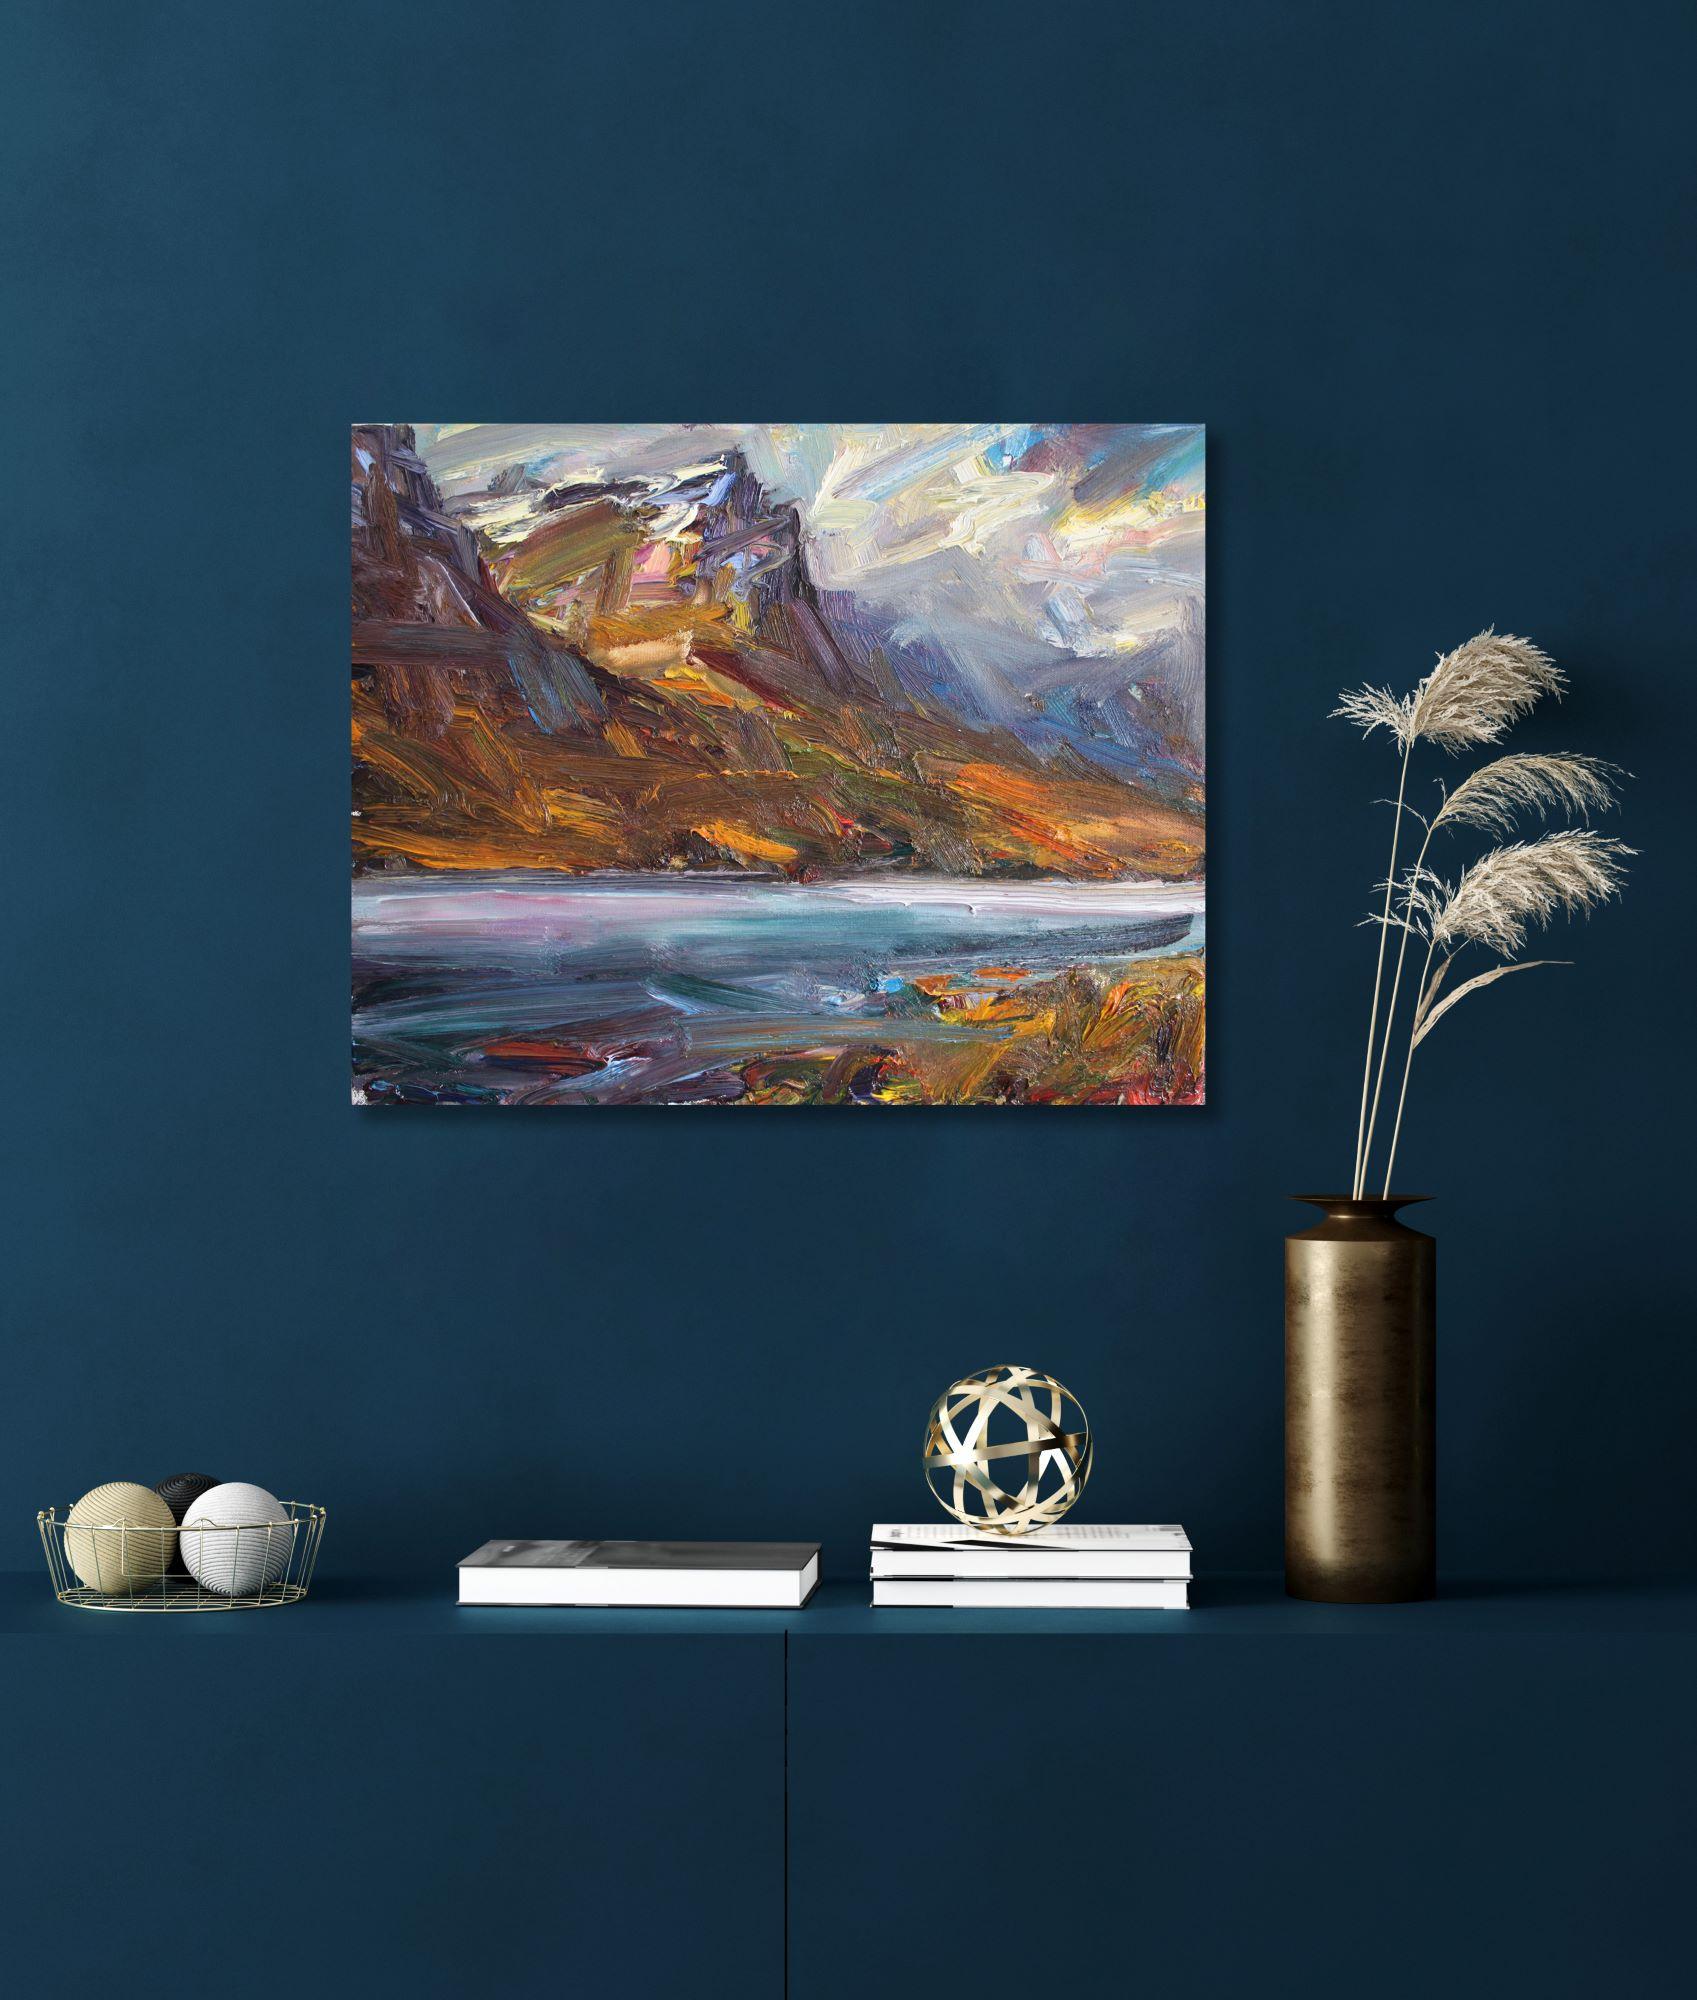 Loch nan Arr by Jonathan Shearer - Landscape oil painting, mountains, blue sky For Sale 1